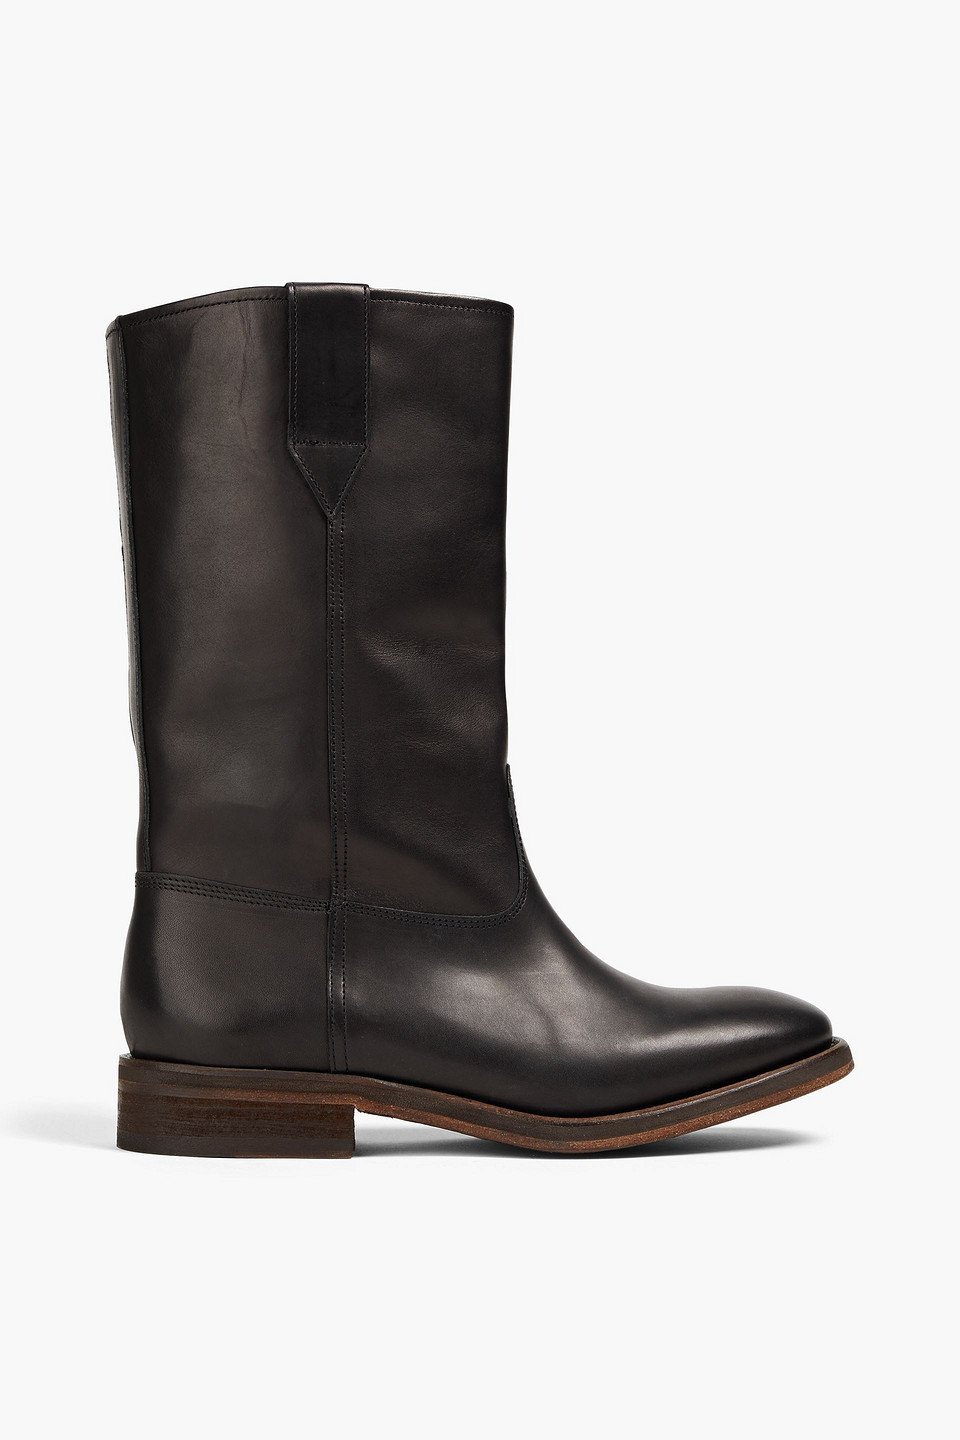 OFFICINE GÉNÉRALE Wgary Leather Boots | Endource